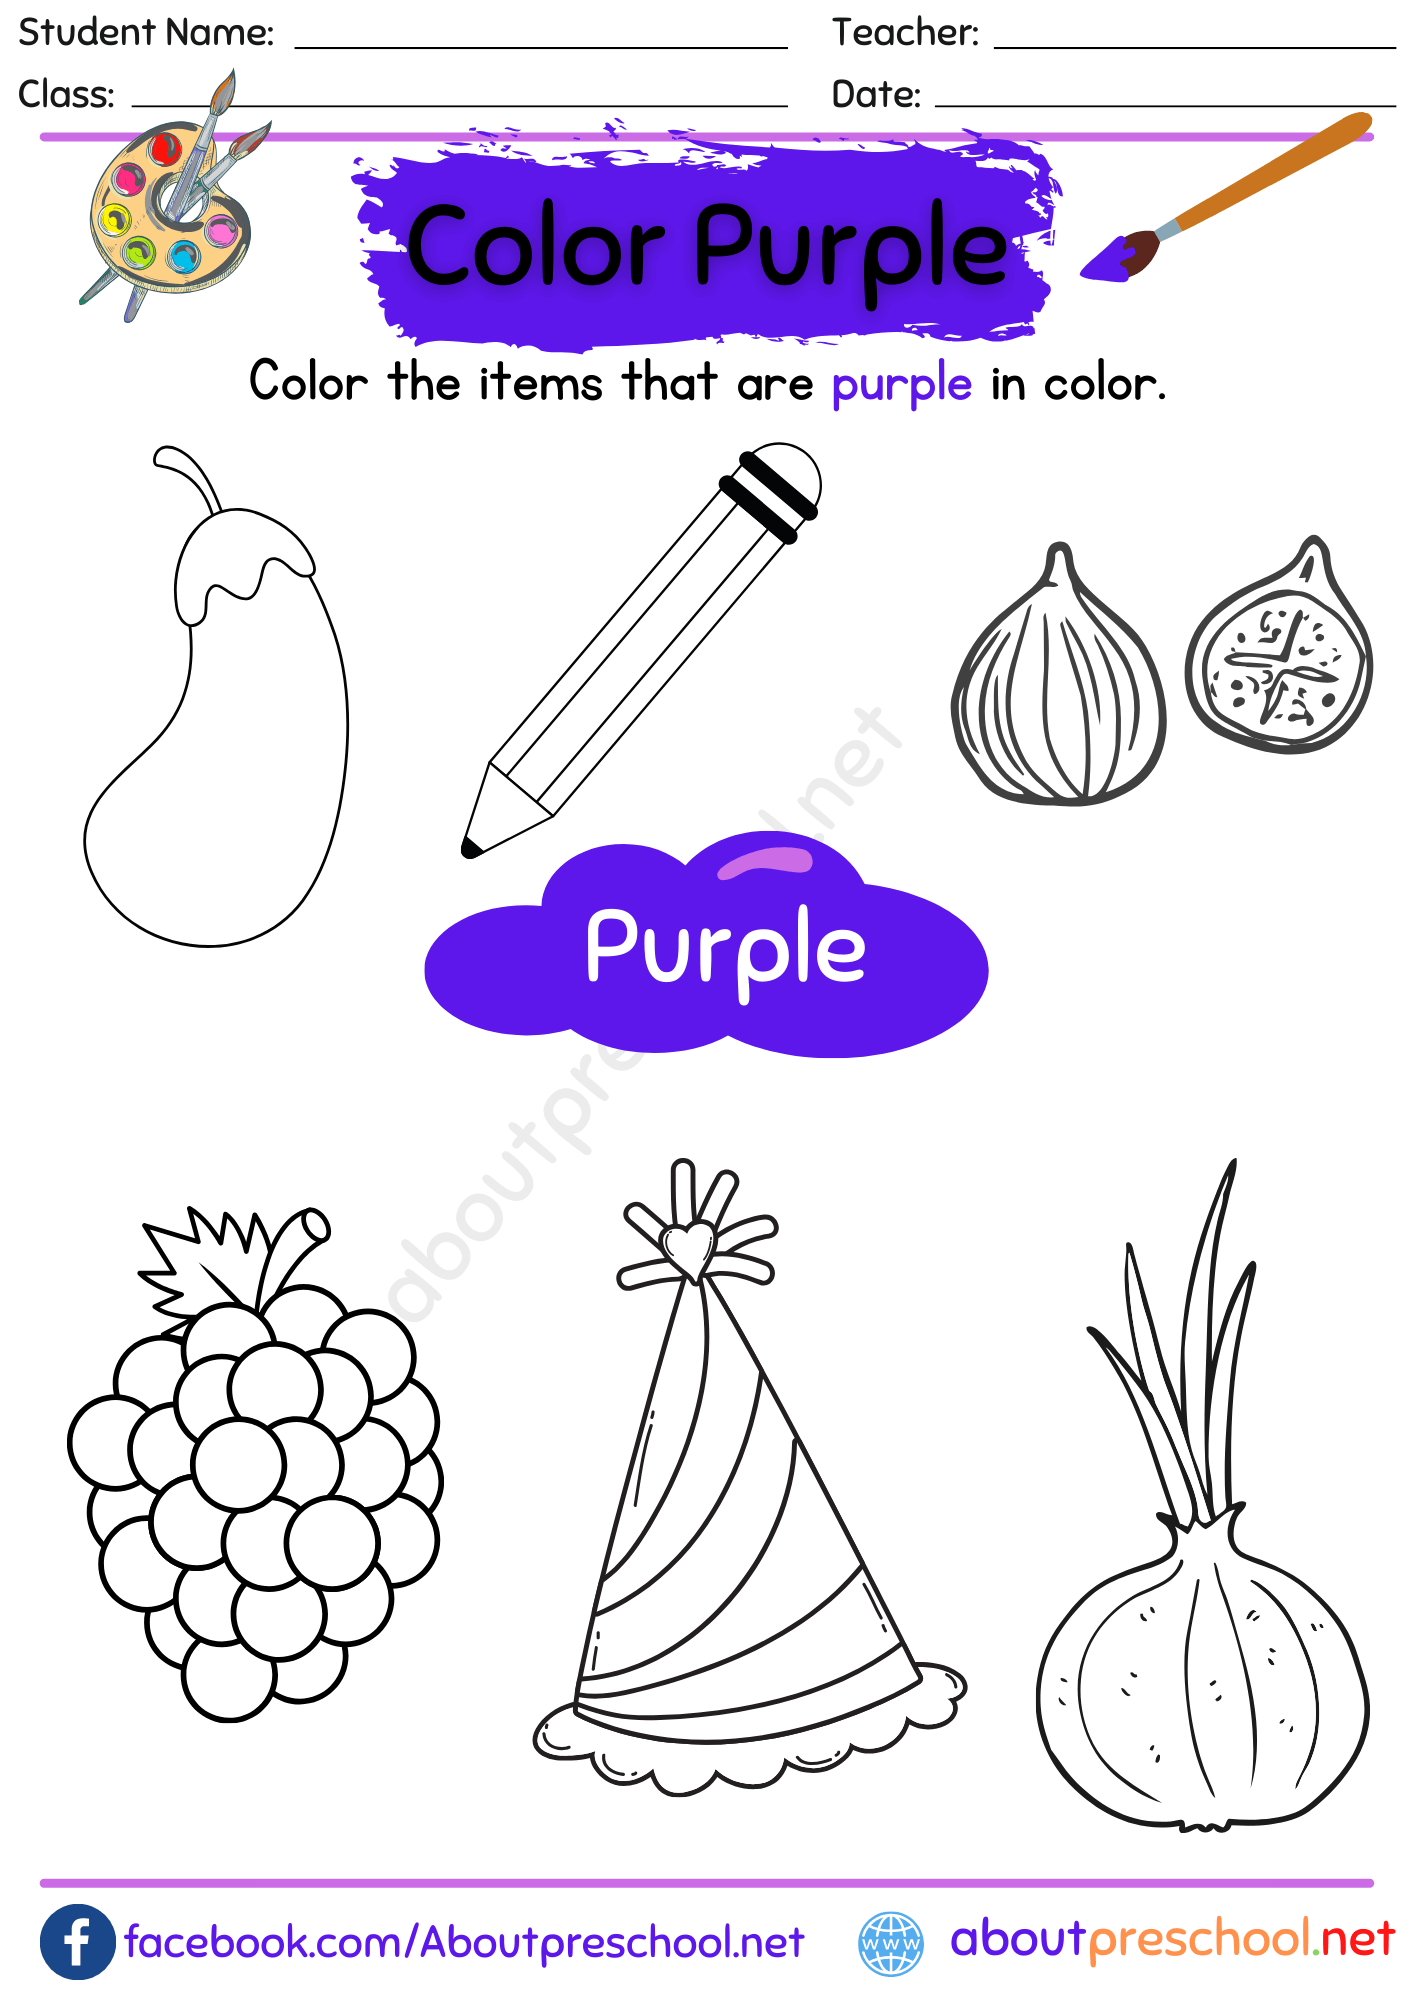 Color Purple Worksheet for Preschool